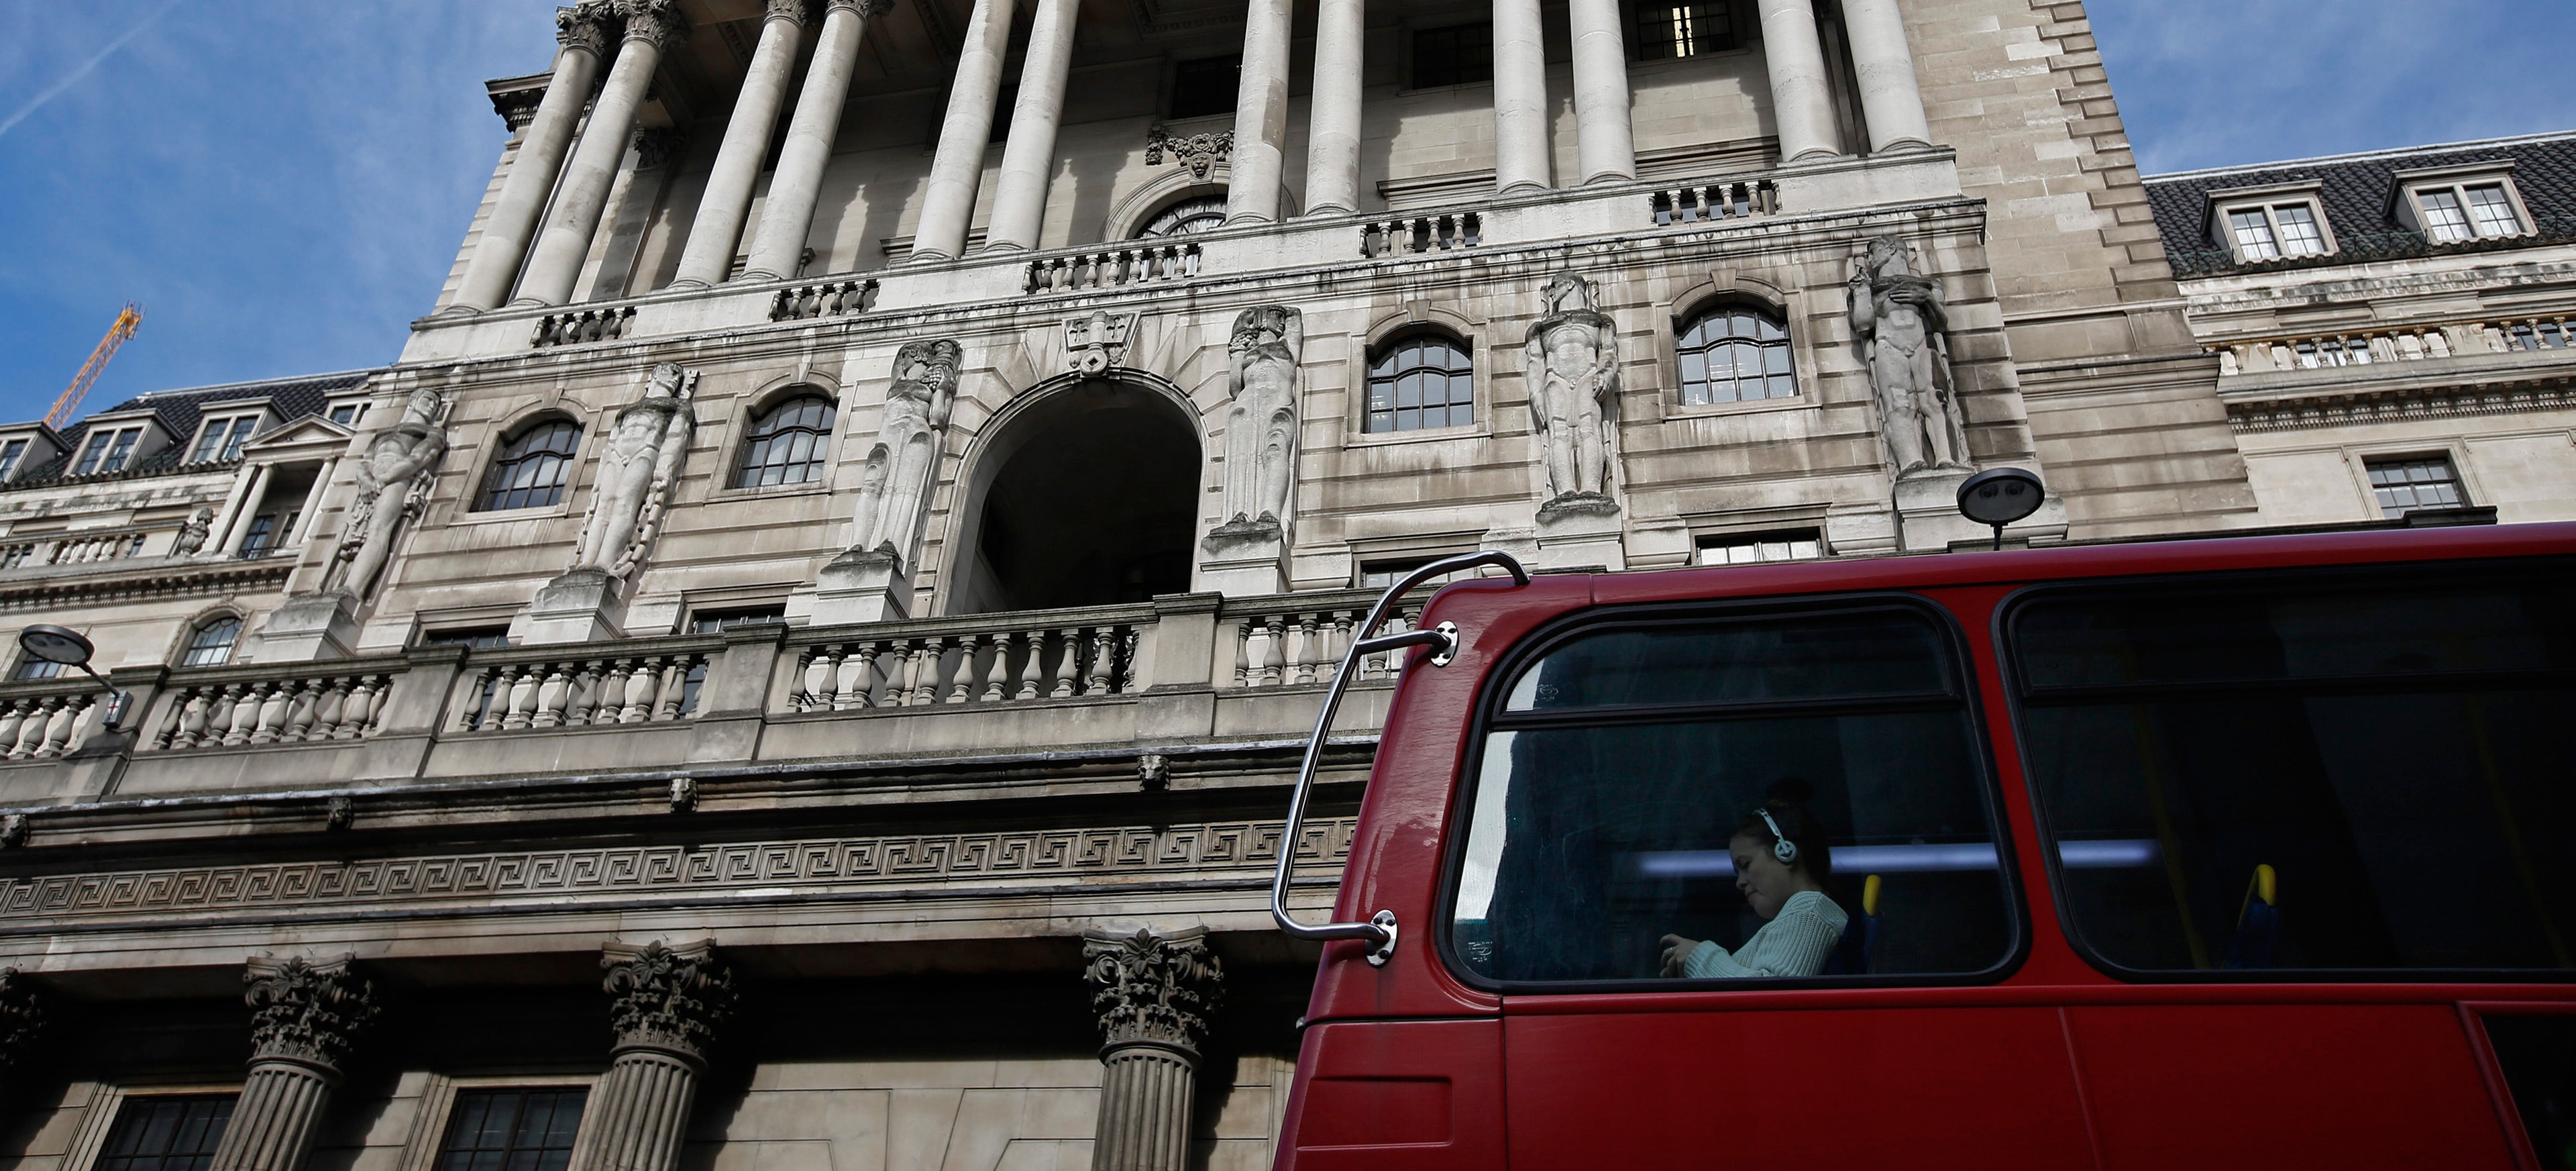 Bank of England Implicated in Libor Fixing: BBC Panorama